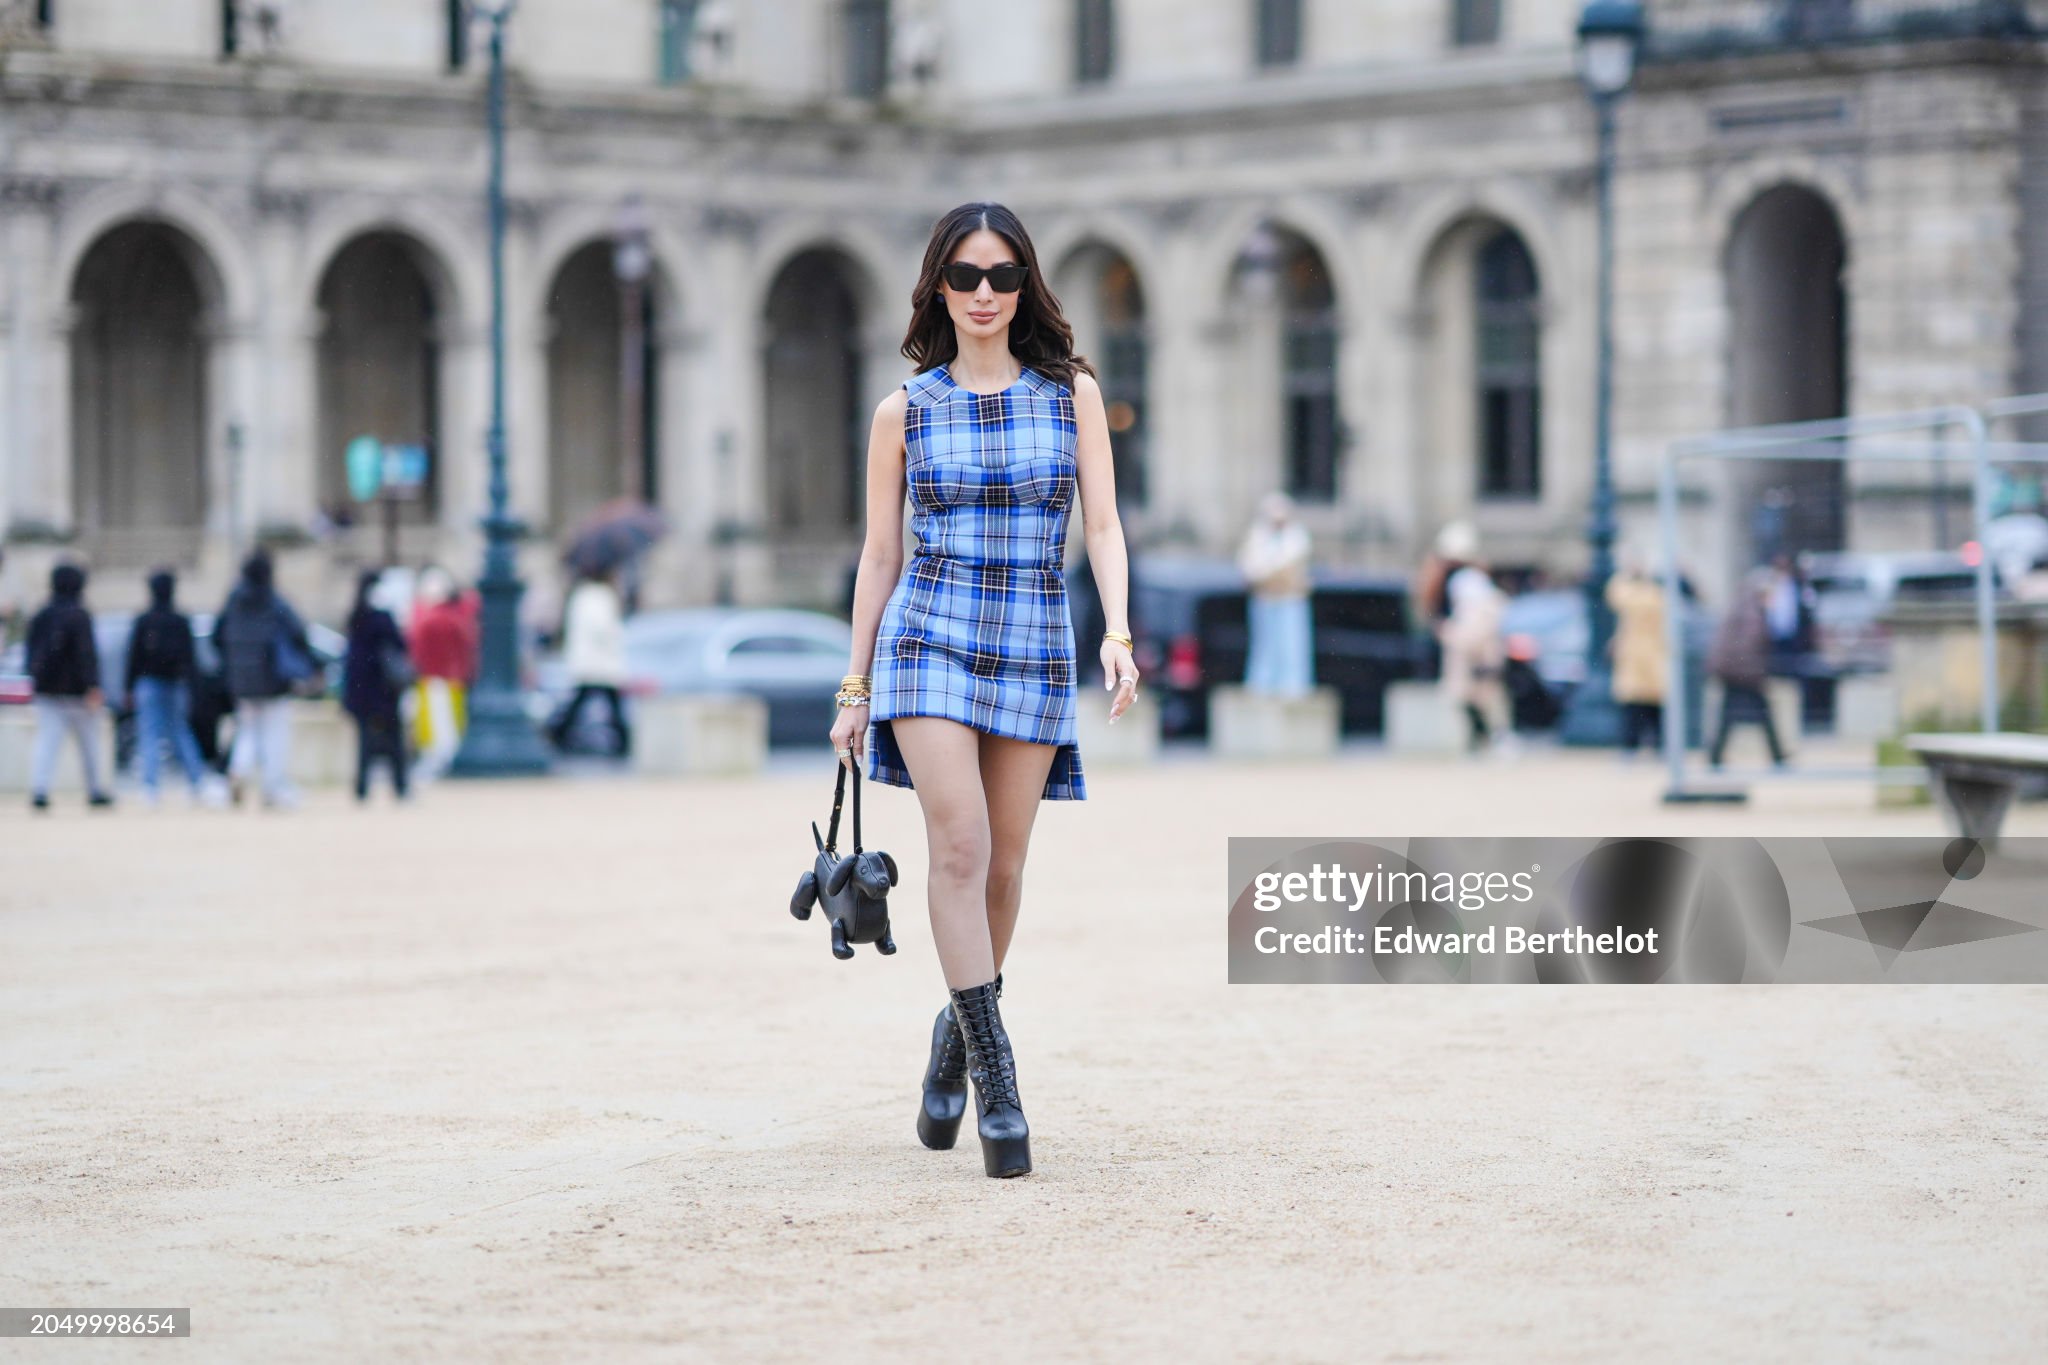 paris-france-heart-evangelista-wears-sunglasses-a-sleeveless-blue-and-black-checkered-checked.jpg